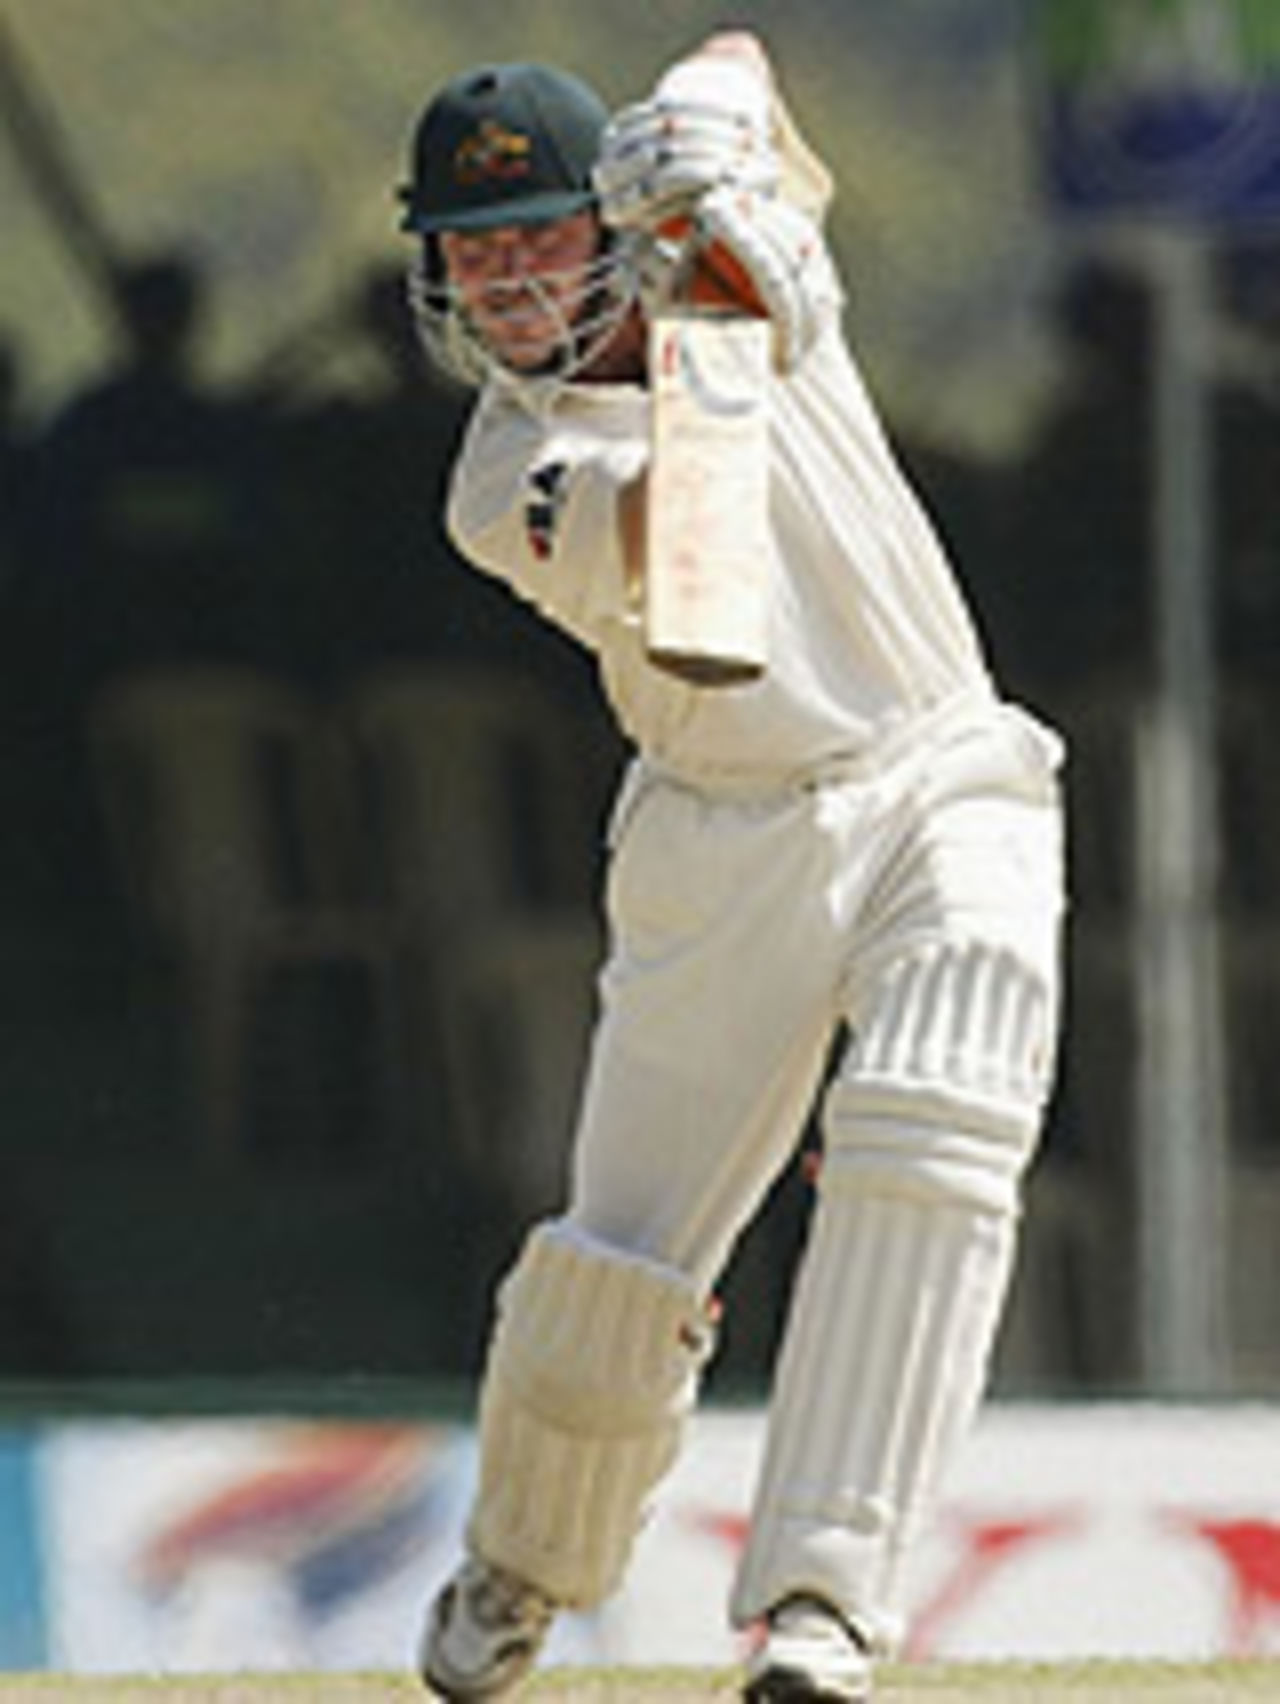 Damien Martyn cover-drives, Sri Lanka v Australia, 2nd Test, Kandy, 3rd day, March 19, 2004